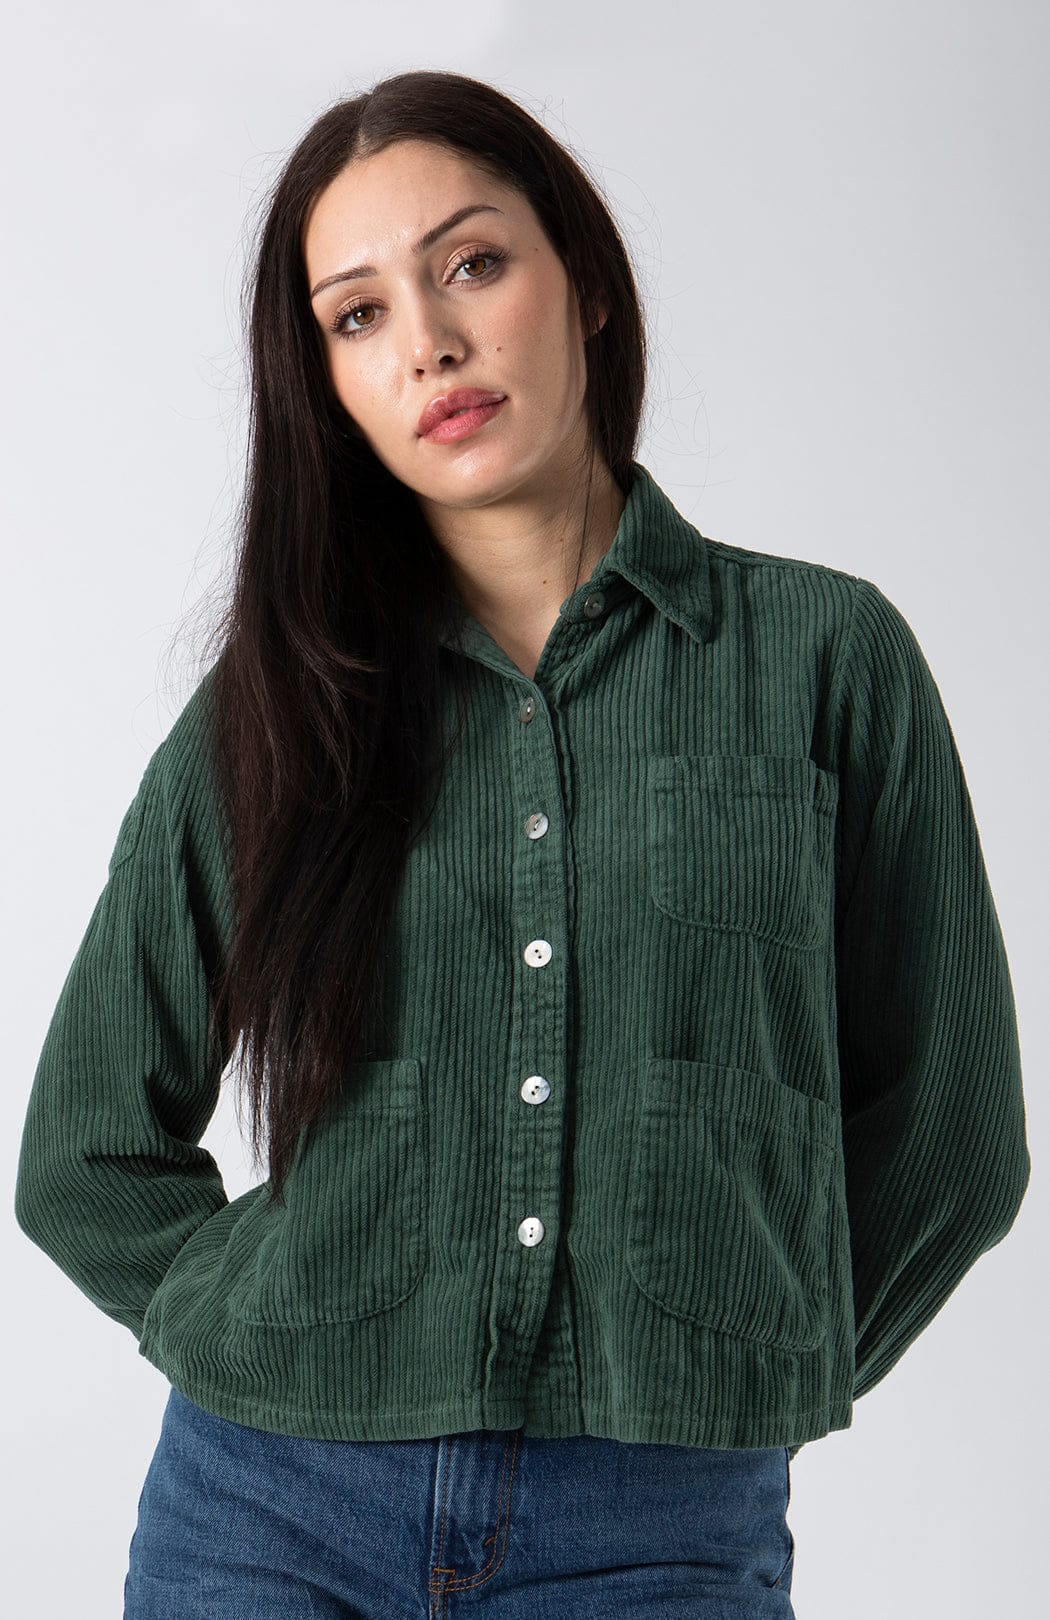 Wide Wale Cord Shirt - Cameo Clothing Line